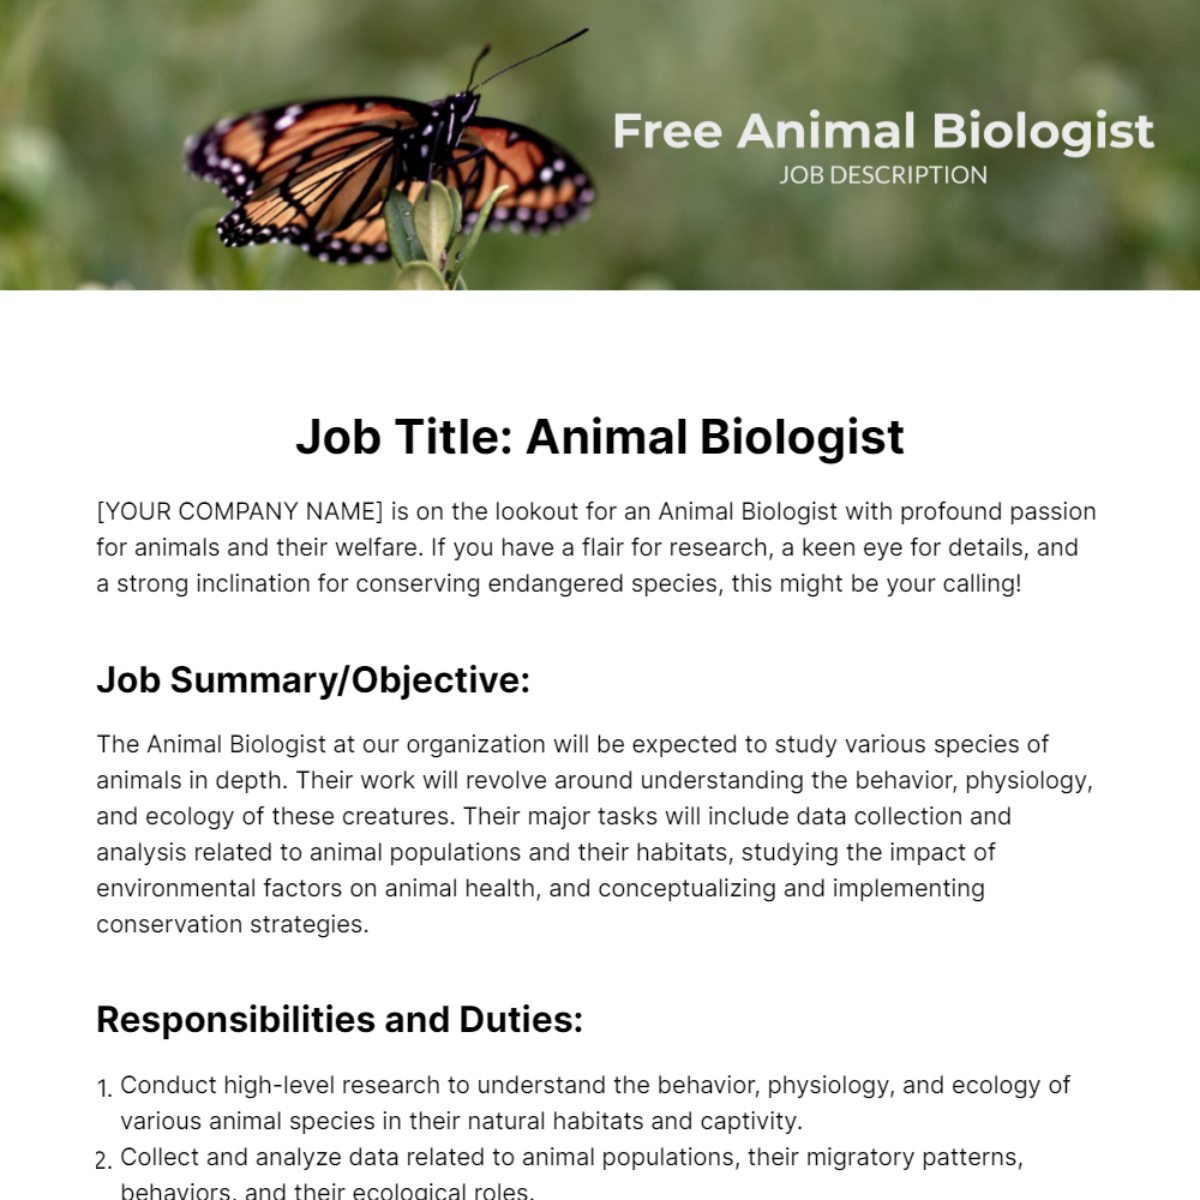 Free Animal Biologist Job Description Template